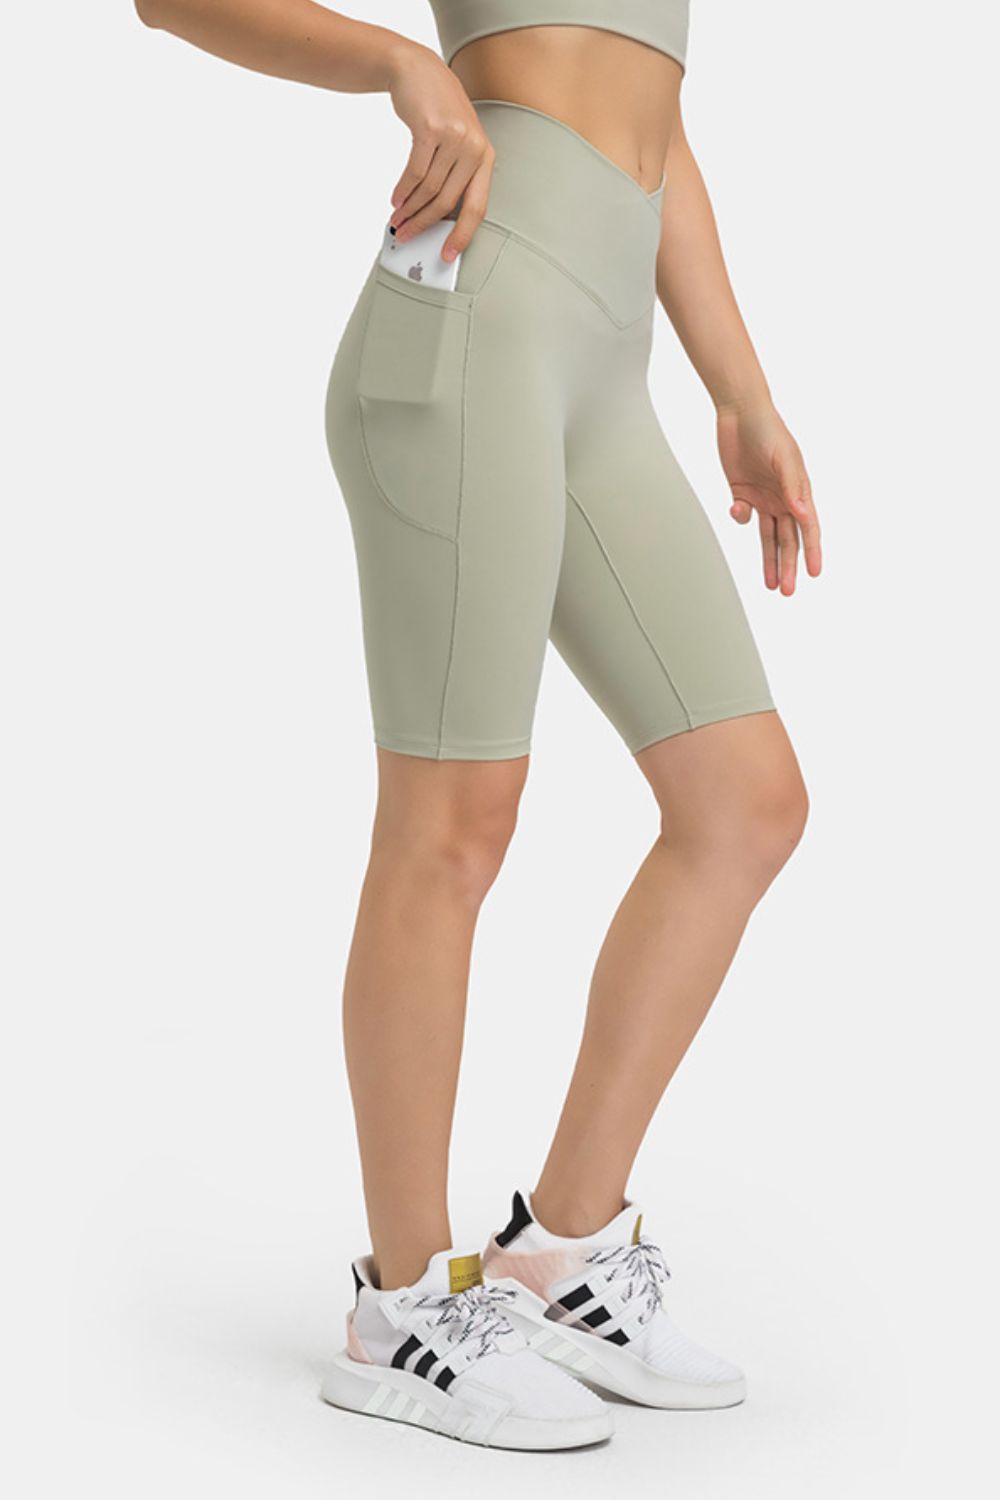 Women's Priscilla High Waist Biker Shorts with Pockets